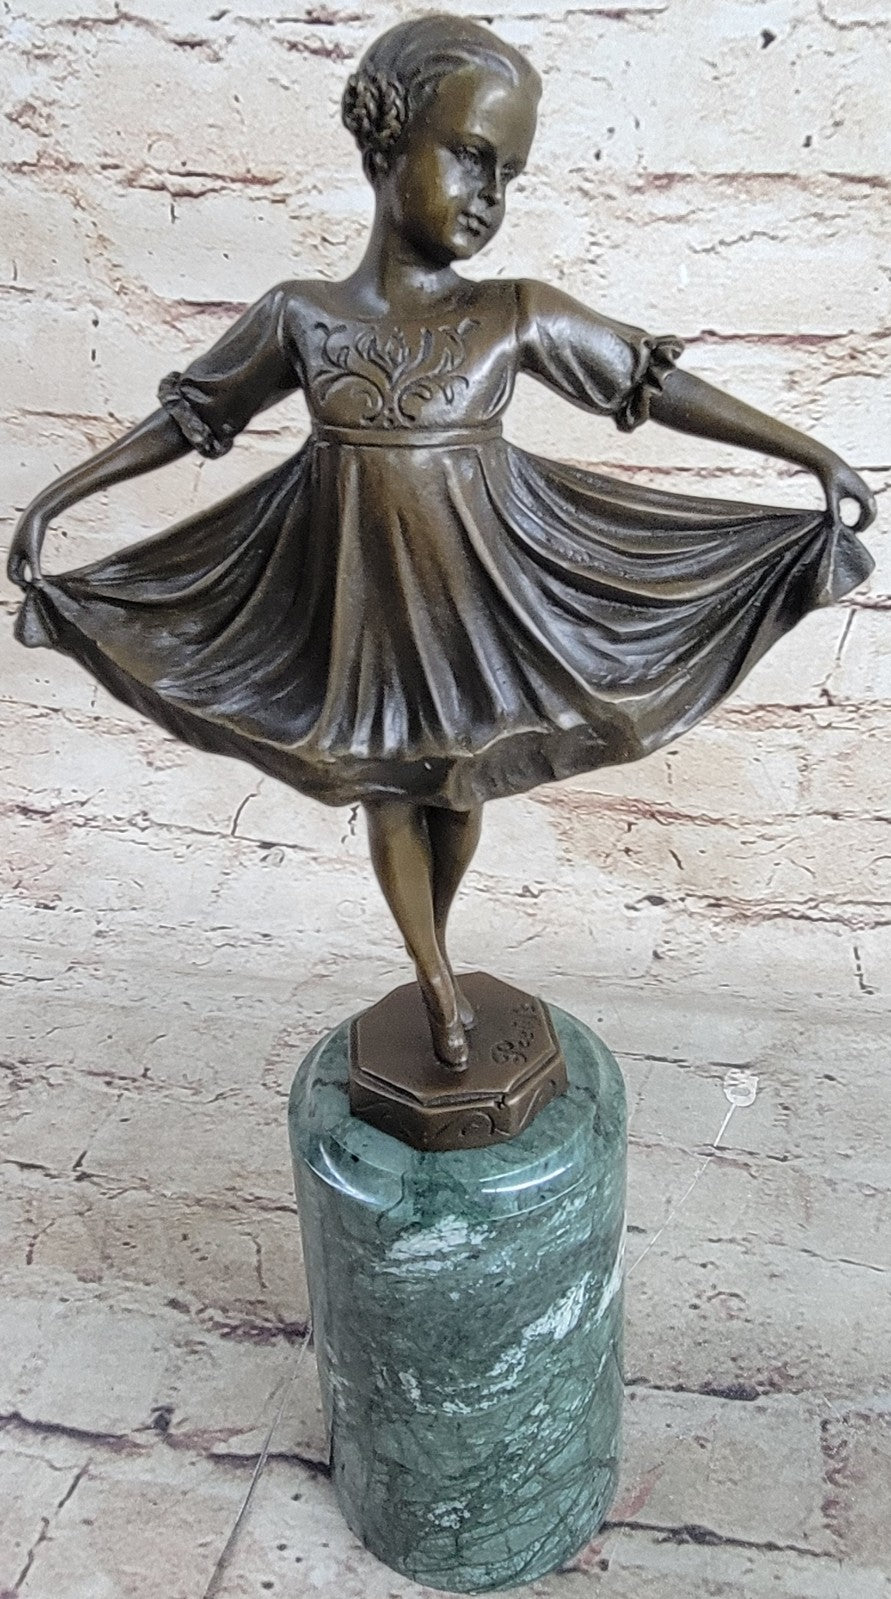 German Preiss Prima Ballerina Art Deco Statue Figurine Bronze Sculpture Hot Cast